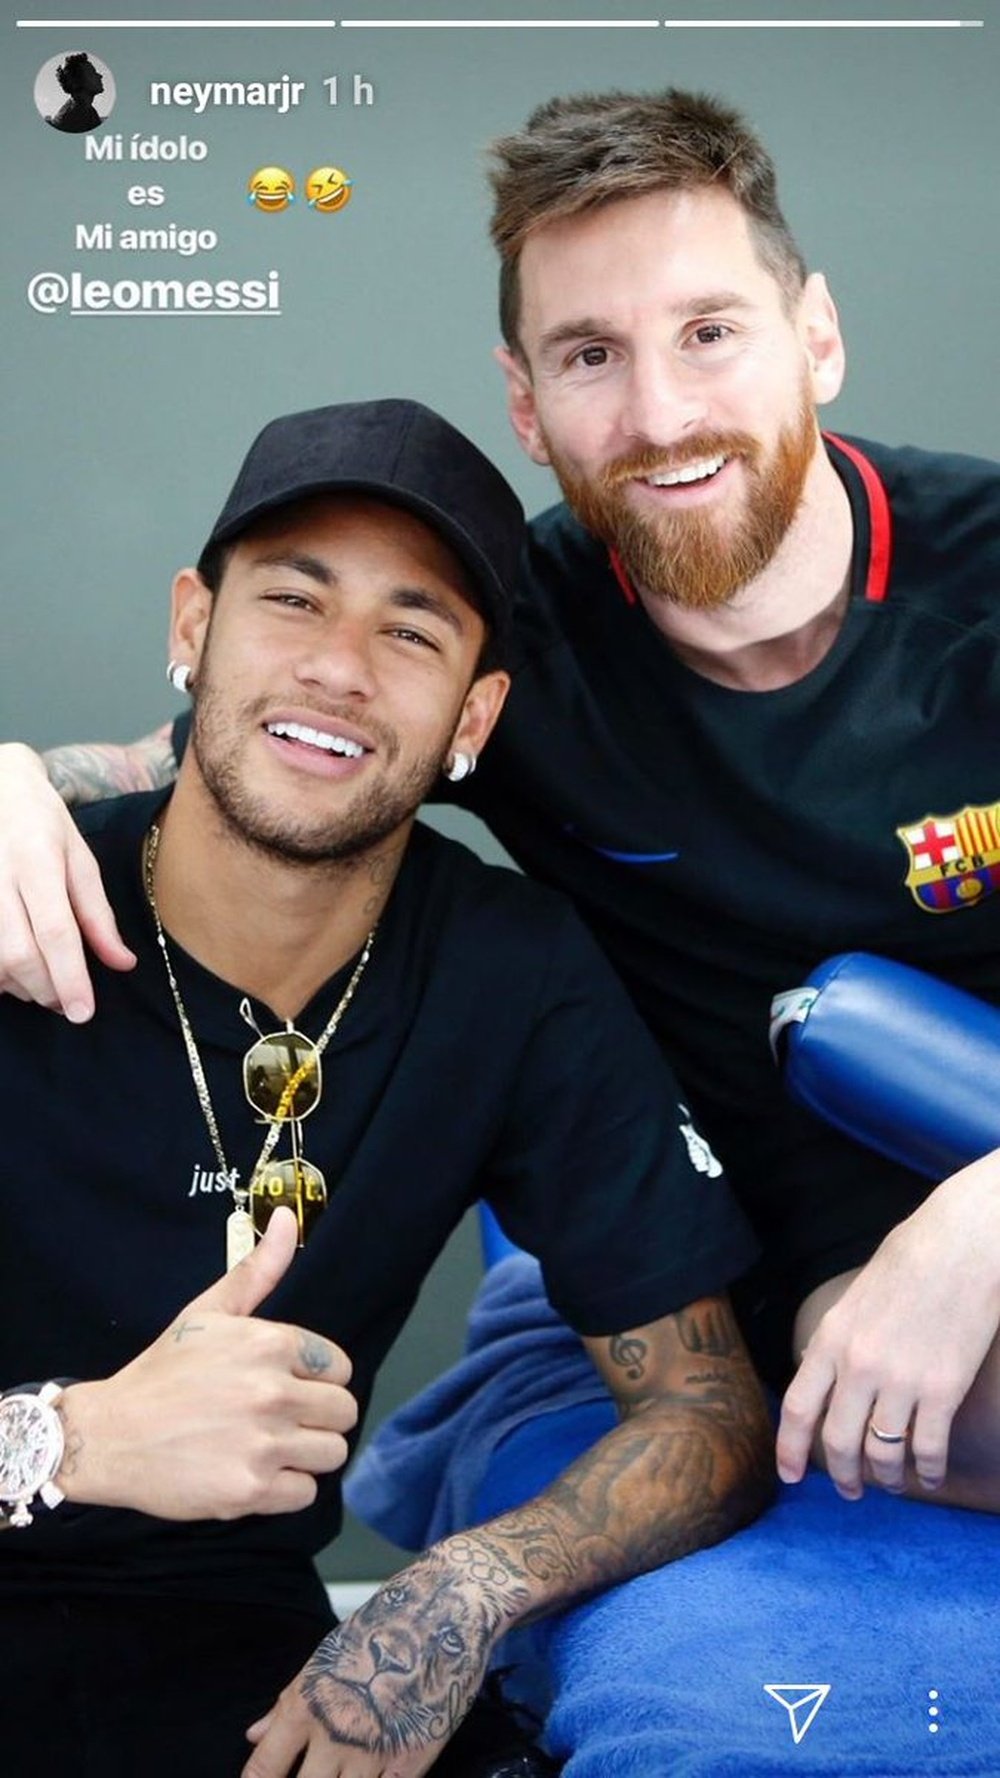 Neymar junto a Messi, nas instalações do Barcelona. Instagram/NeymarJR